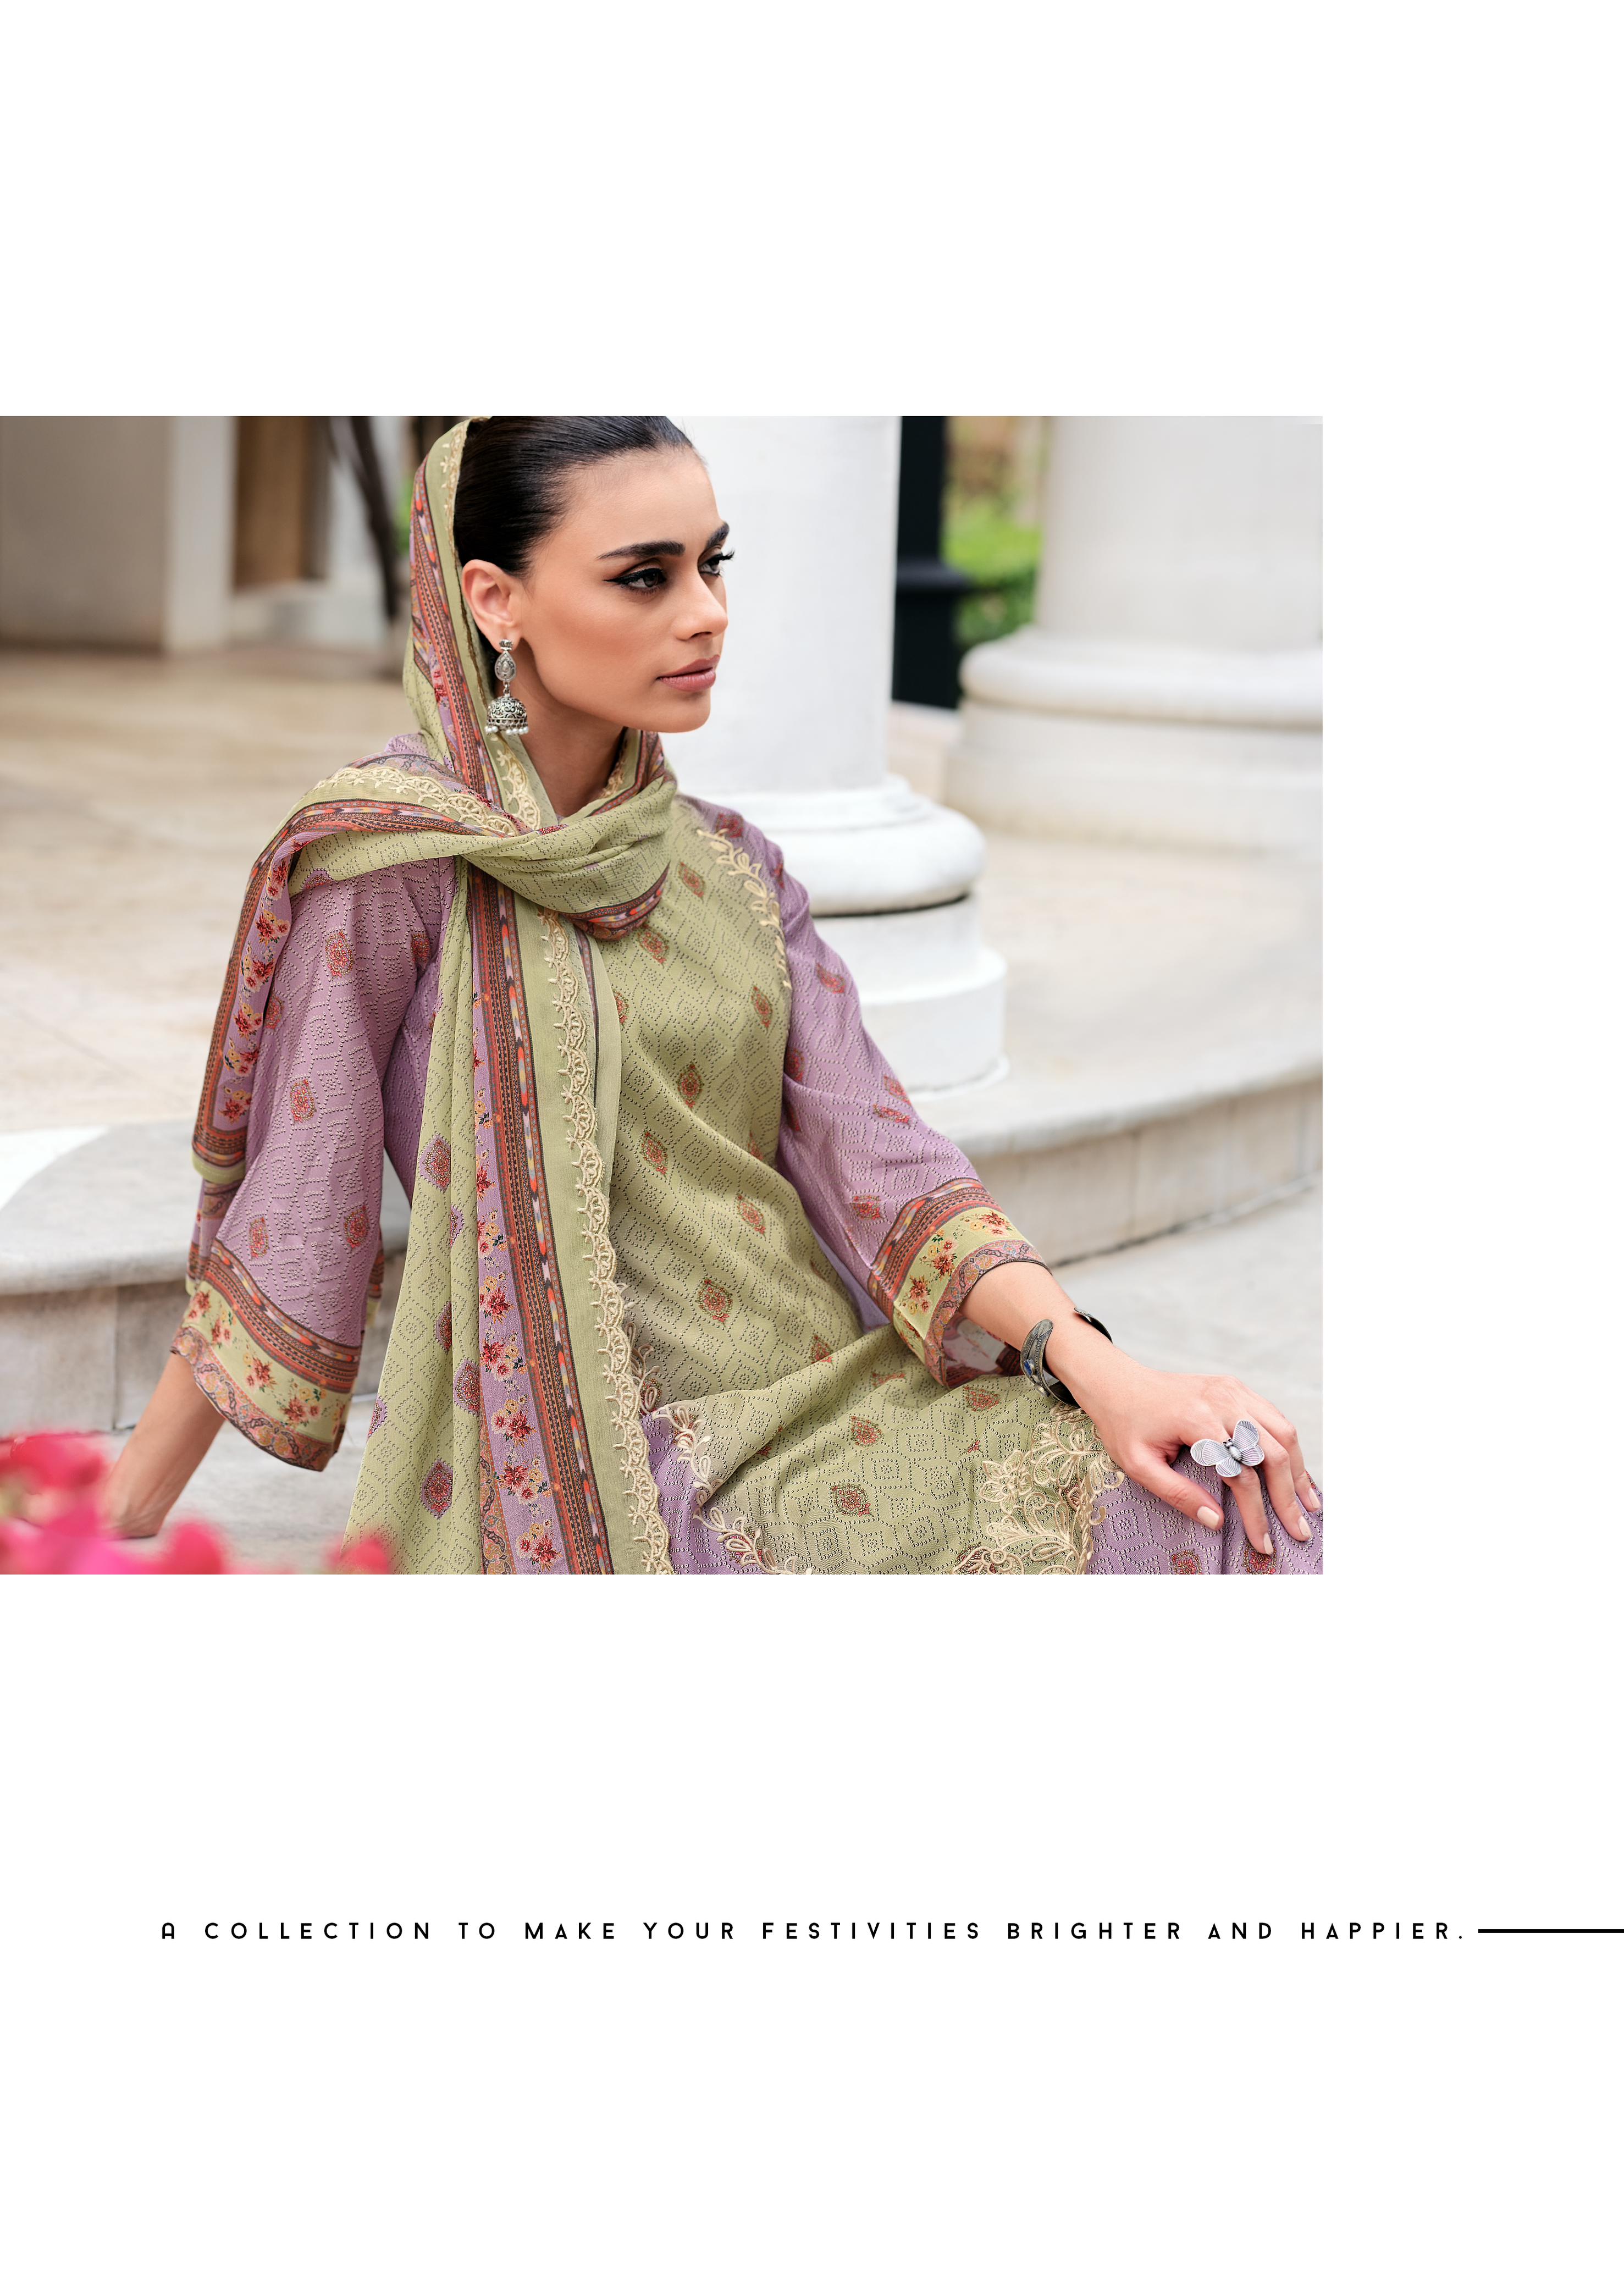 Gull Jee Israt Viscose Muslin Digital Print Embroidery Work Salwar Suit Latest Eid Collection 2024